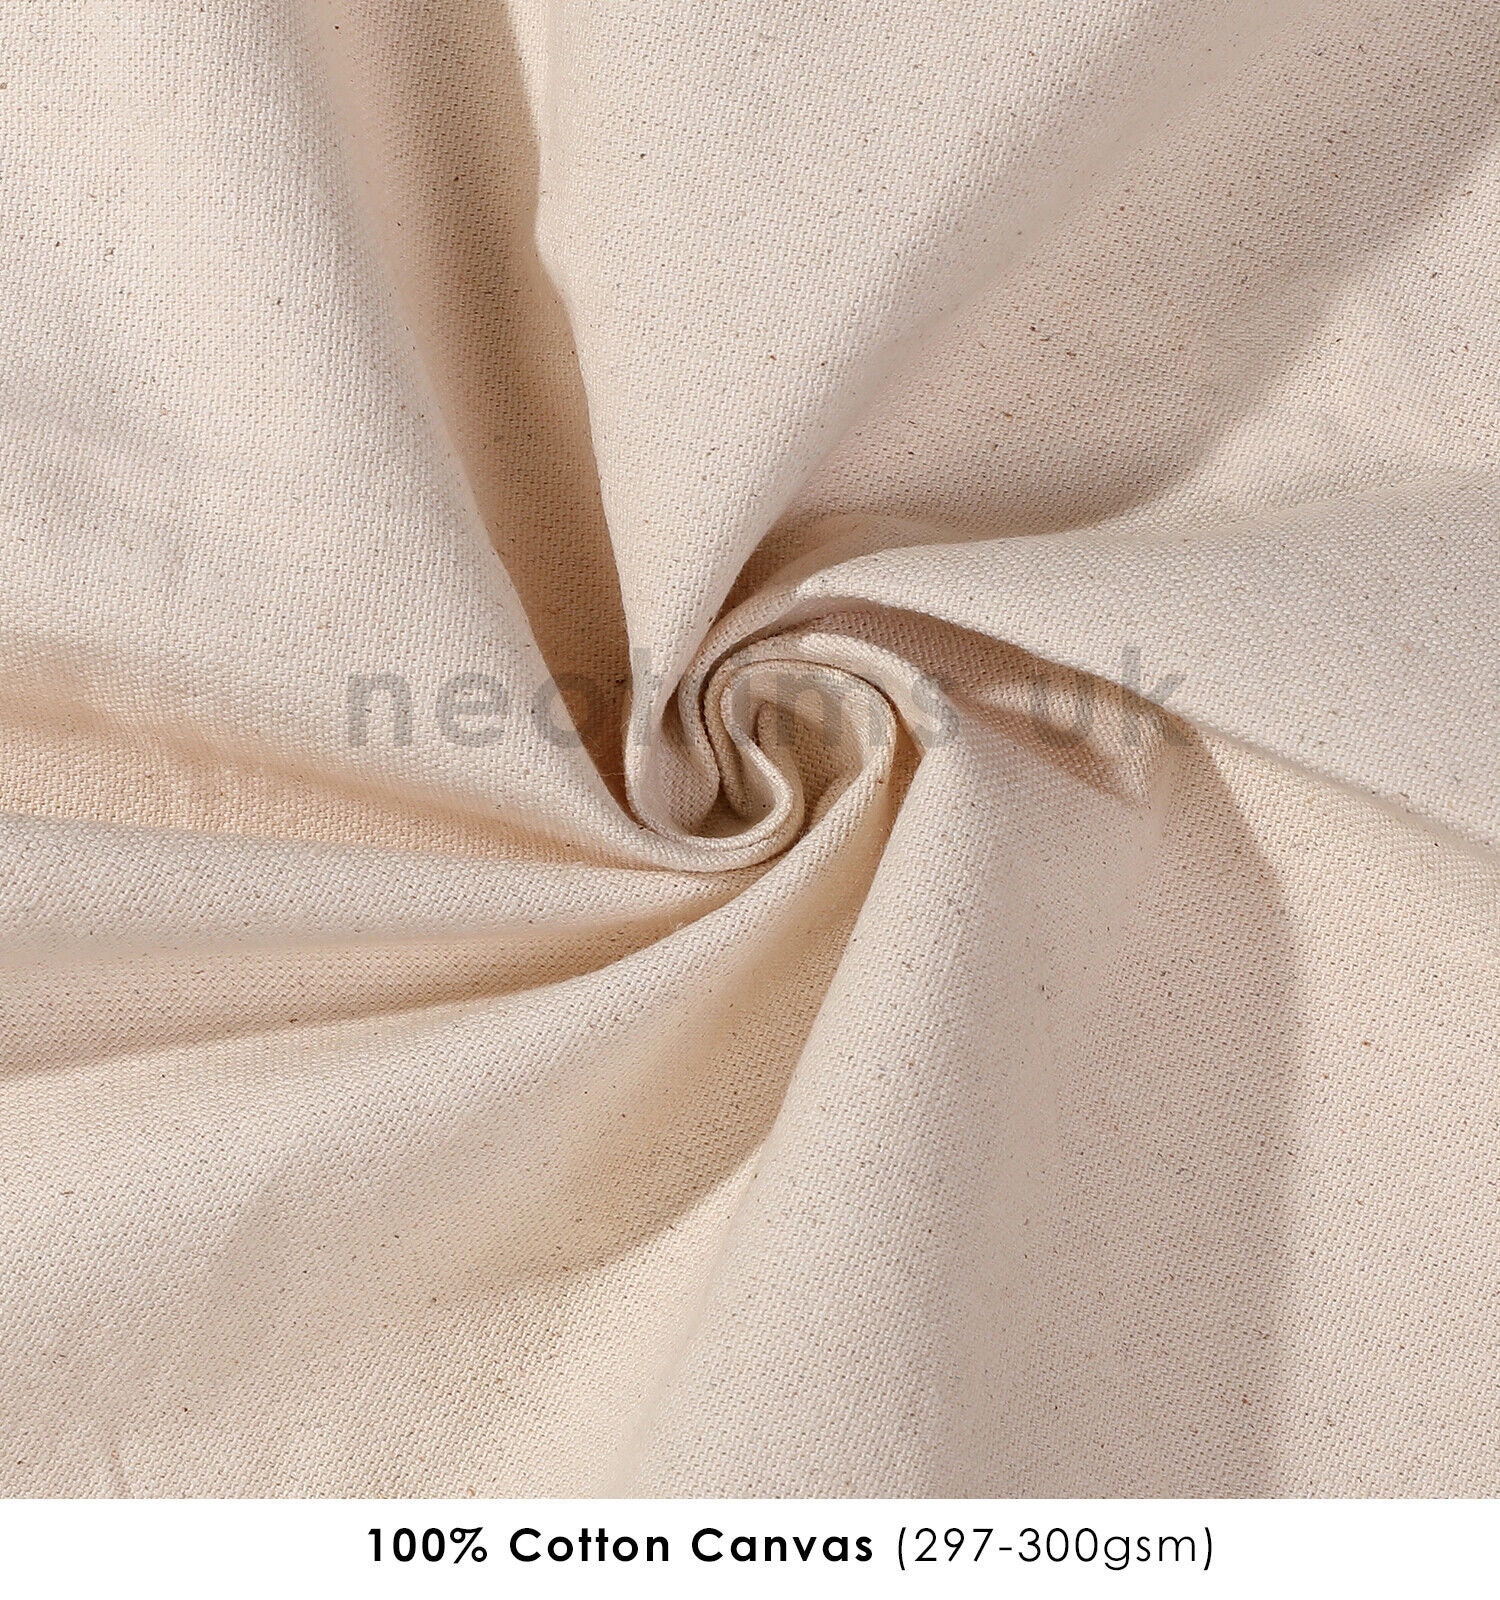 Waxed Canvas Fabric, 16oz Hand Waxed Cotton Canvas Fabric, Hand